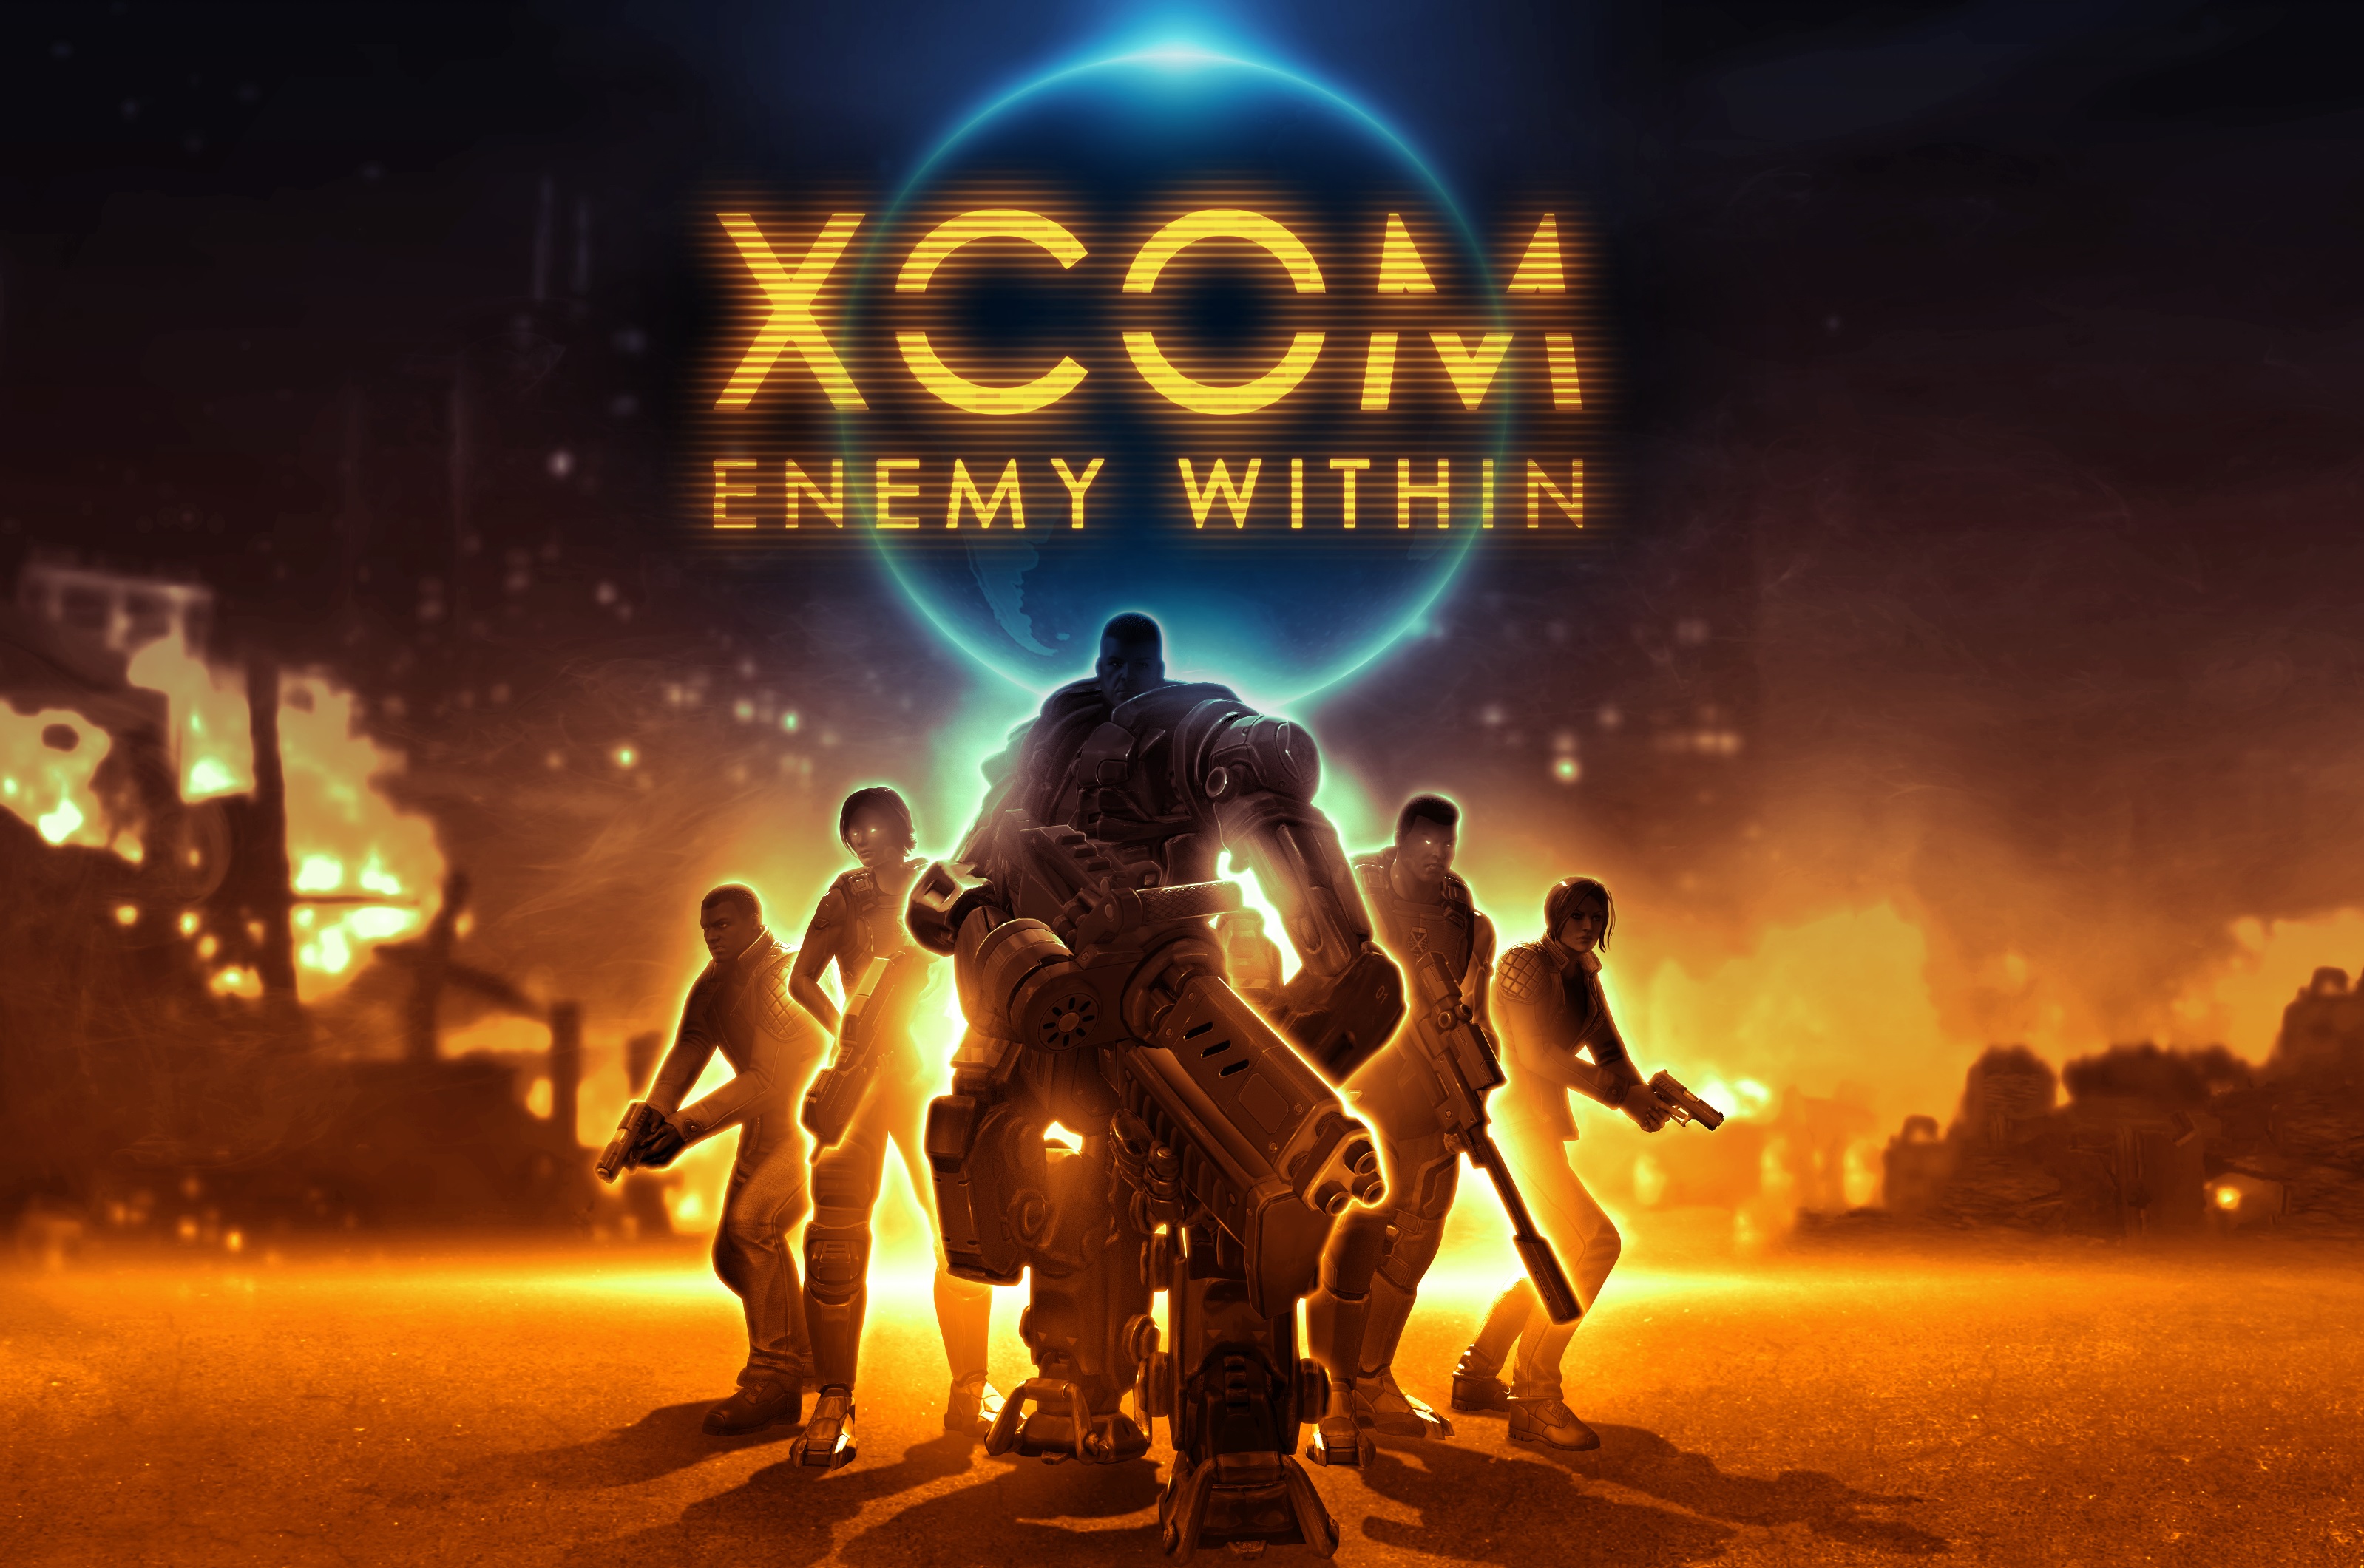 XCOM_Enemy_Within_2013_08_21_13_014.jpg